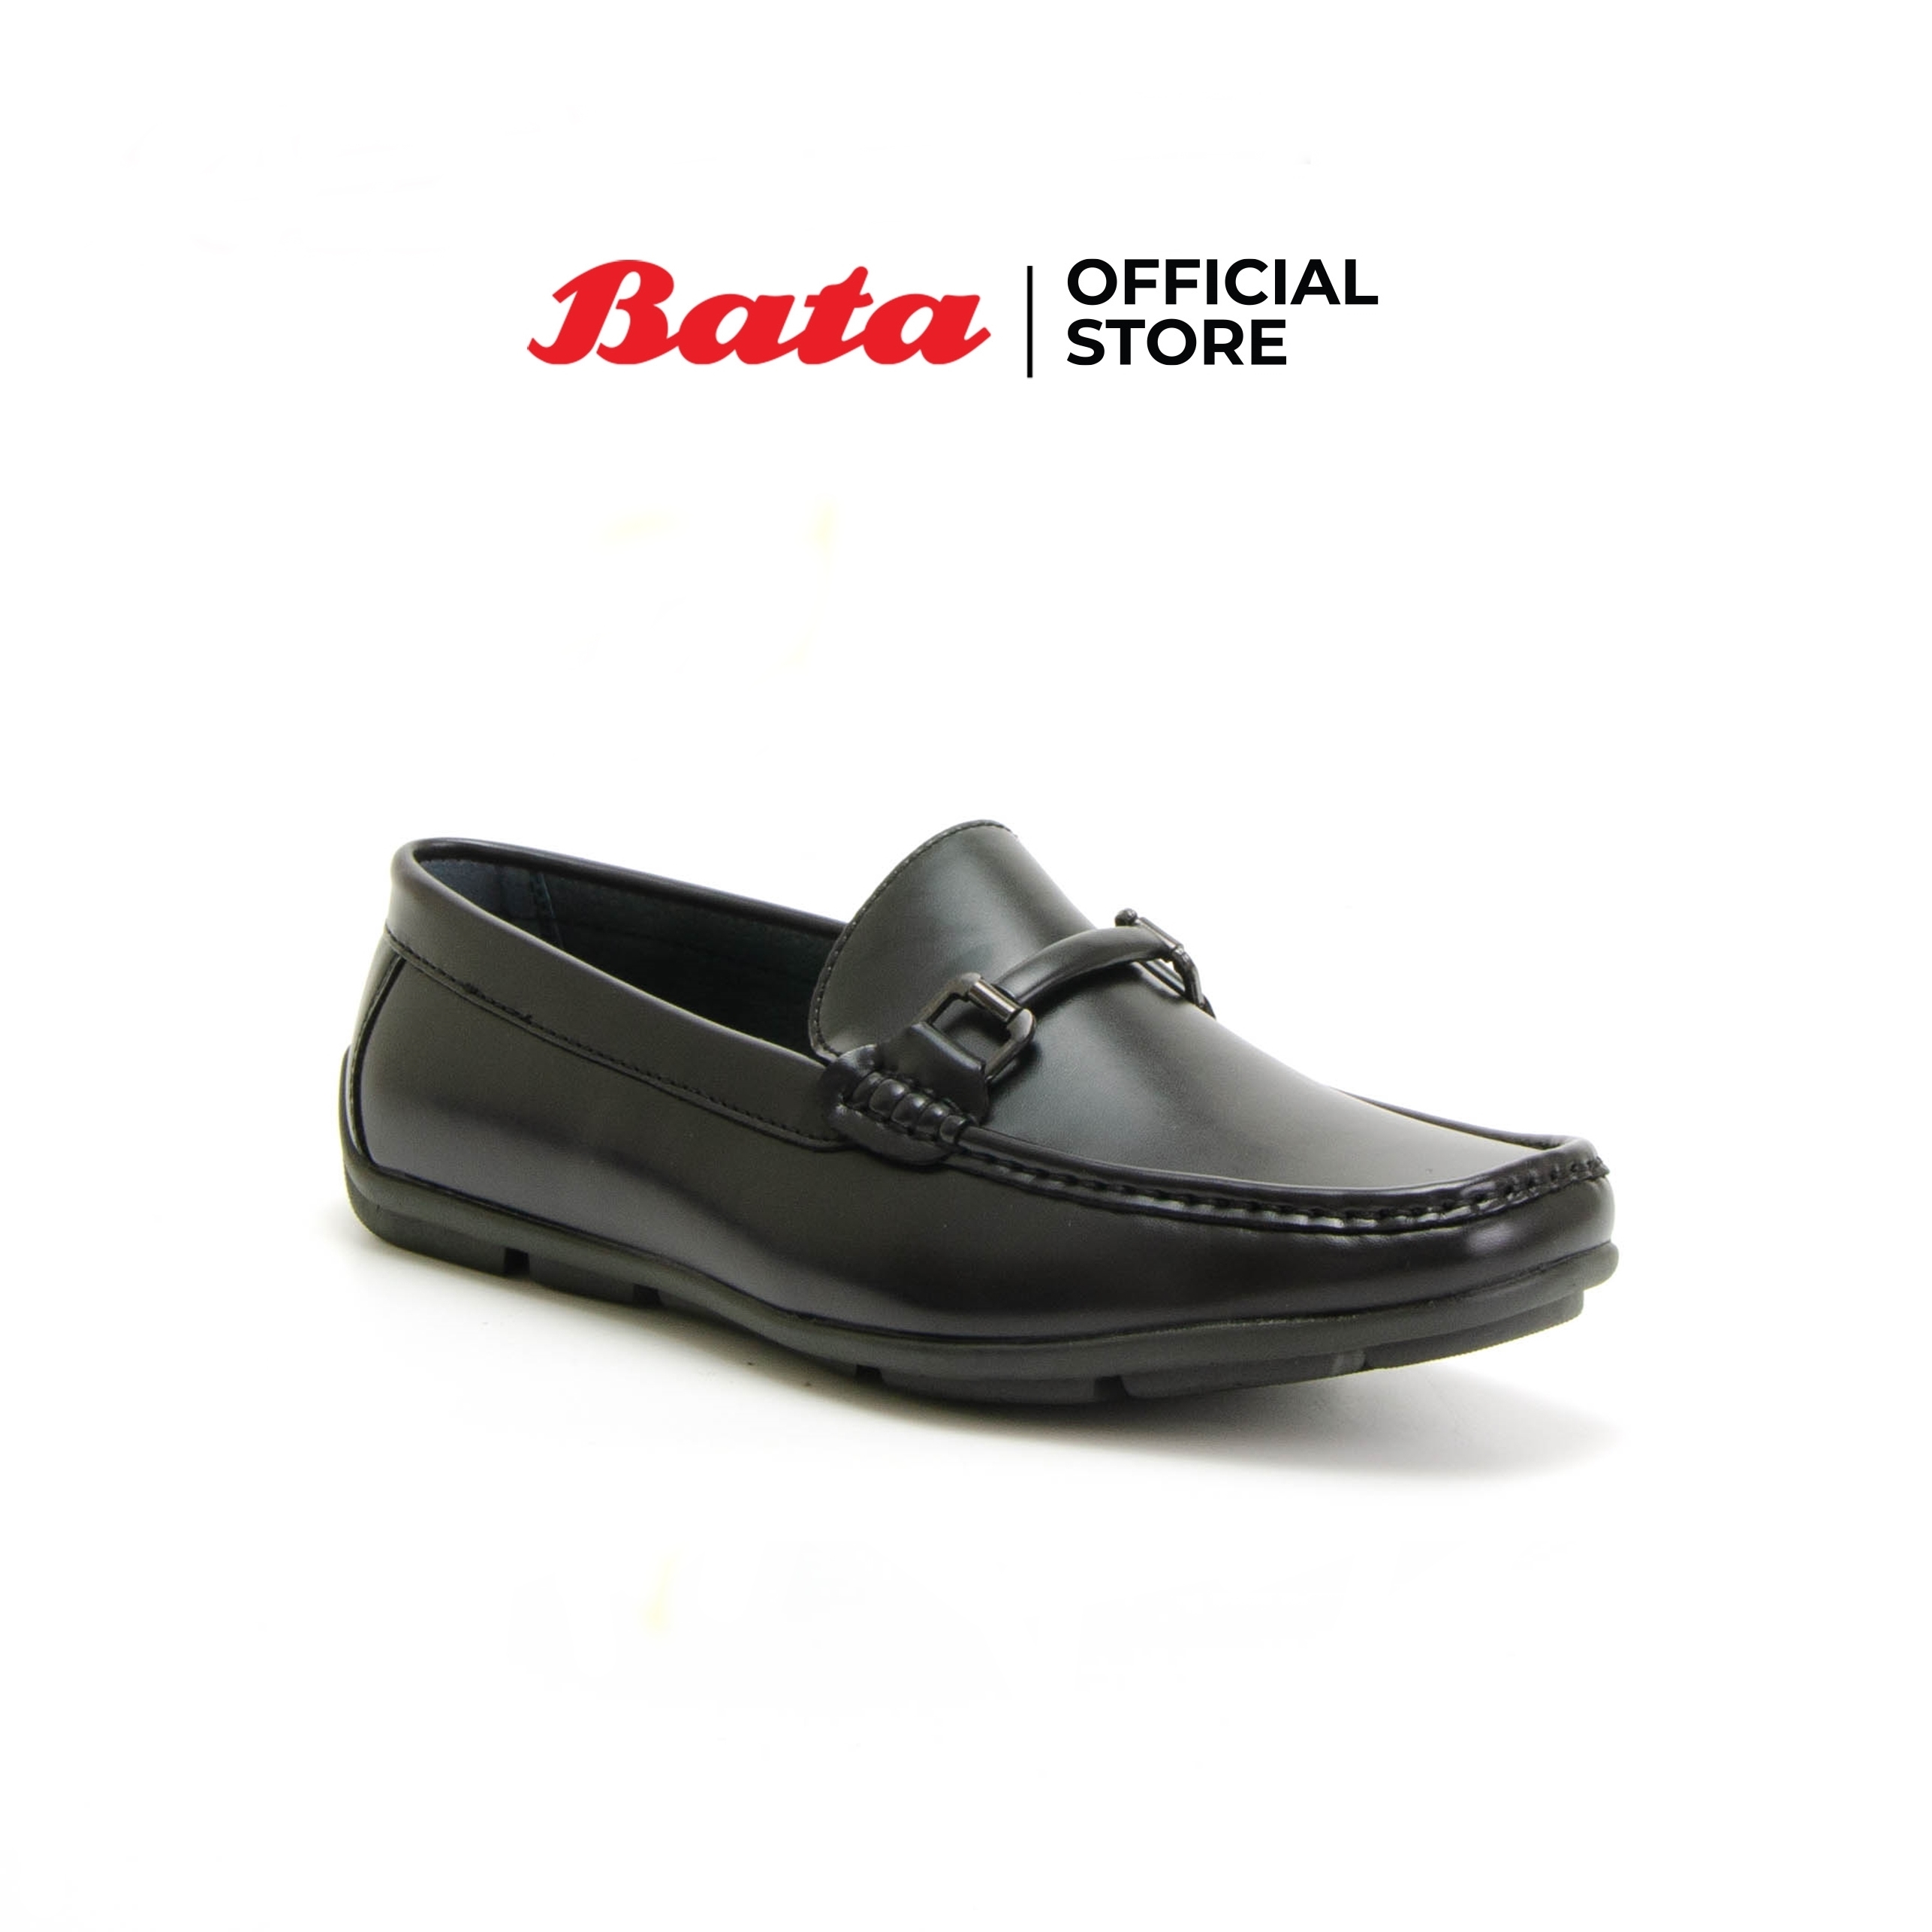 Bata MEN'S CASUAL รองเท้าลำลอง MOCCASIN แบบสวม สีน้ำตาล รหัส 8514307 / สีดำ รหัส 8516307 Mencasual Fashion